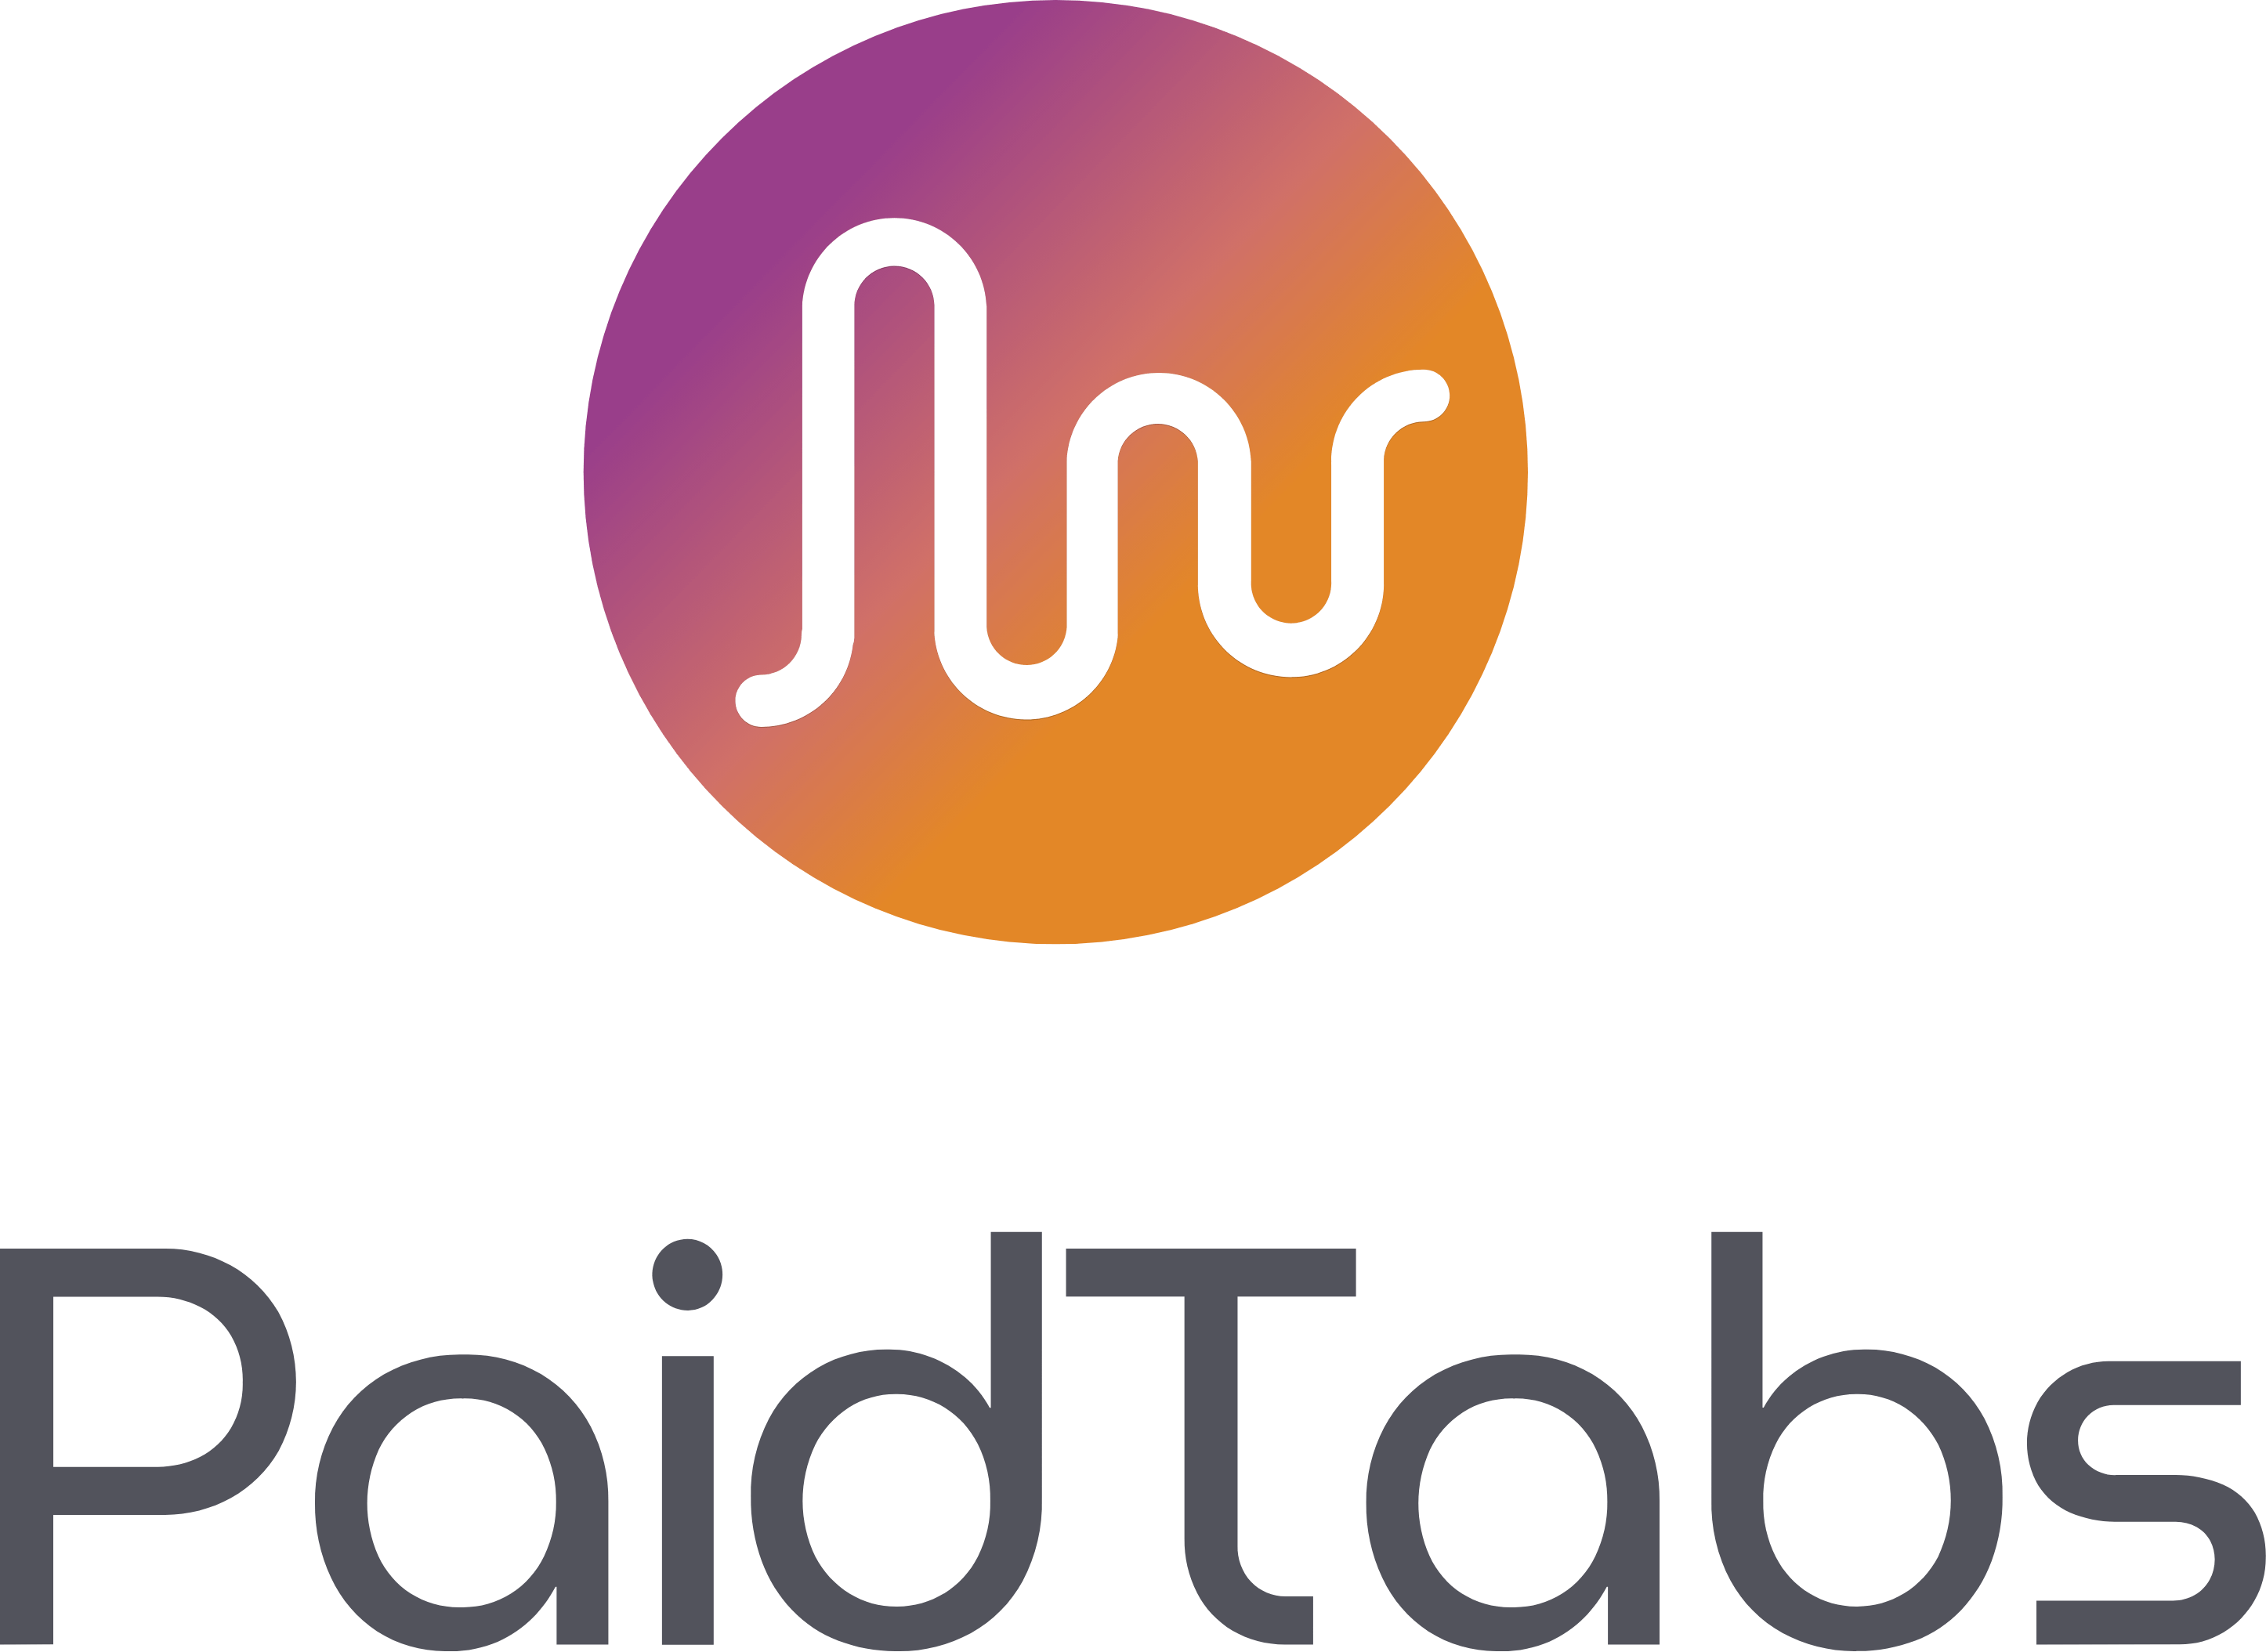 Download PaidTabs logo vertical png